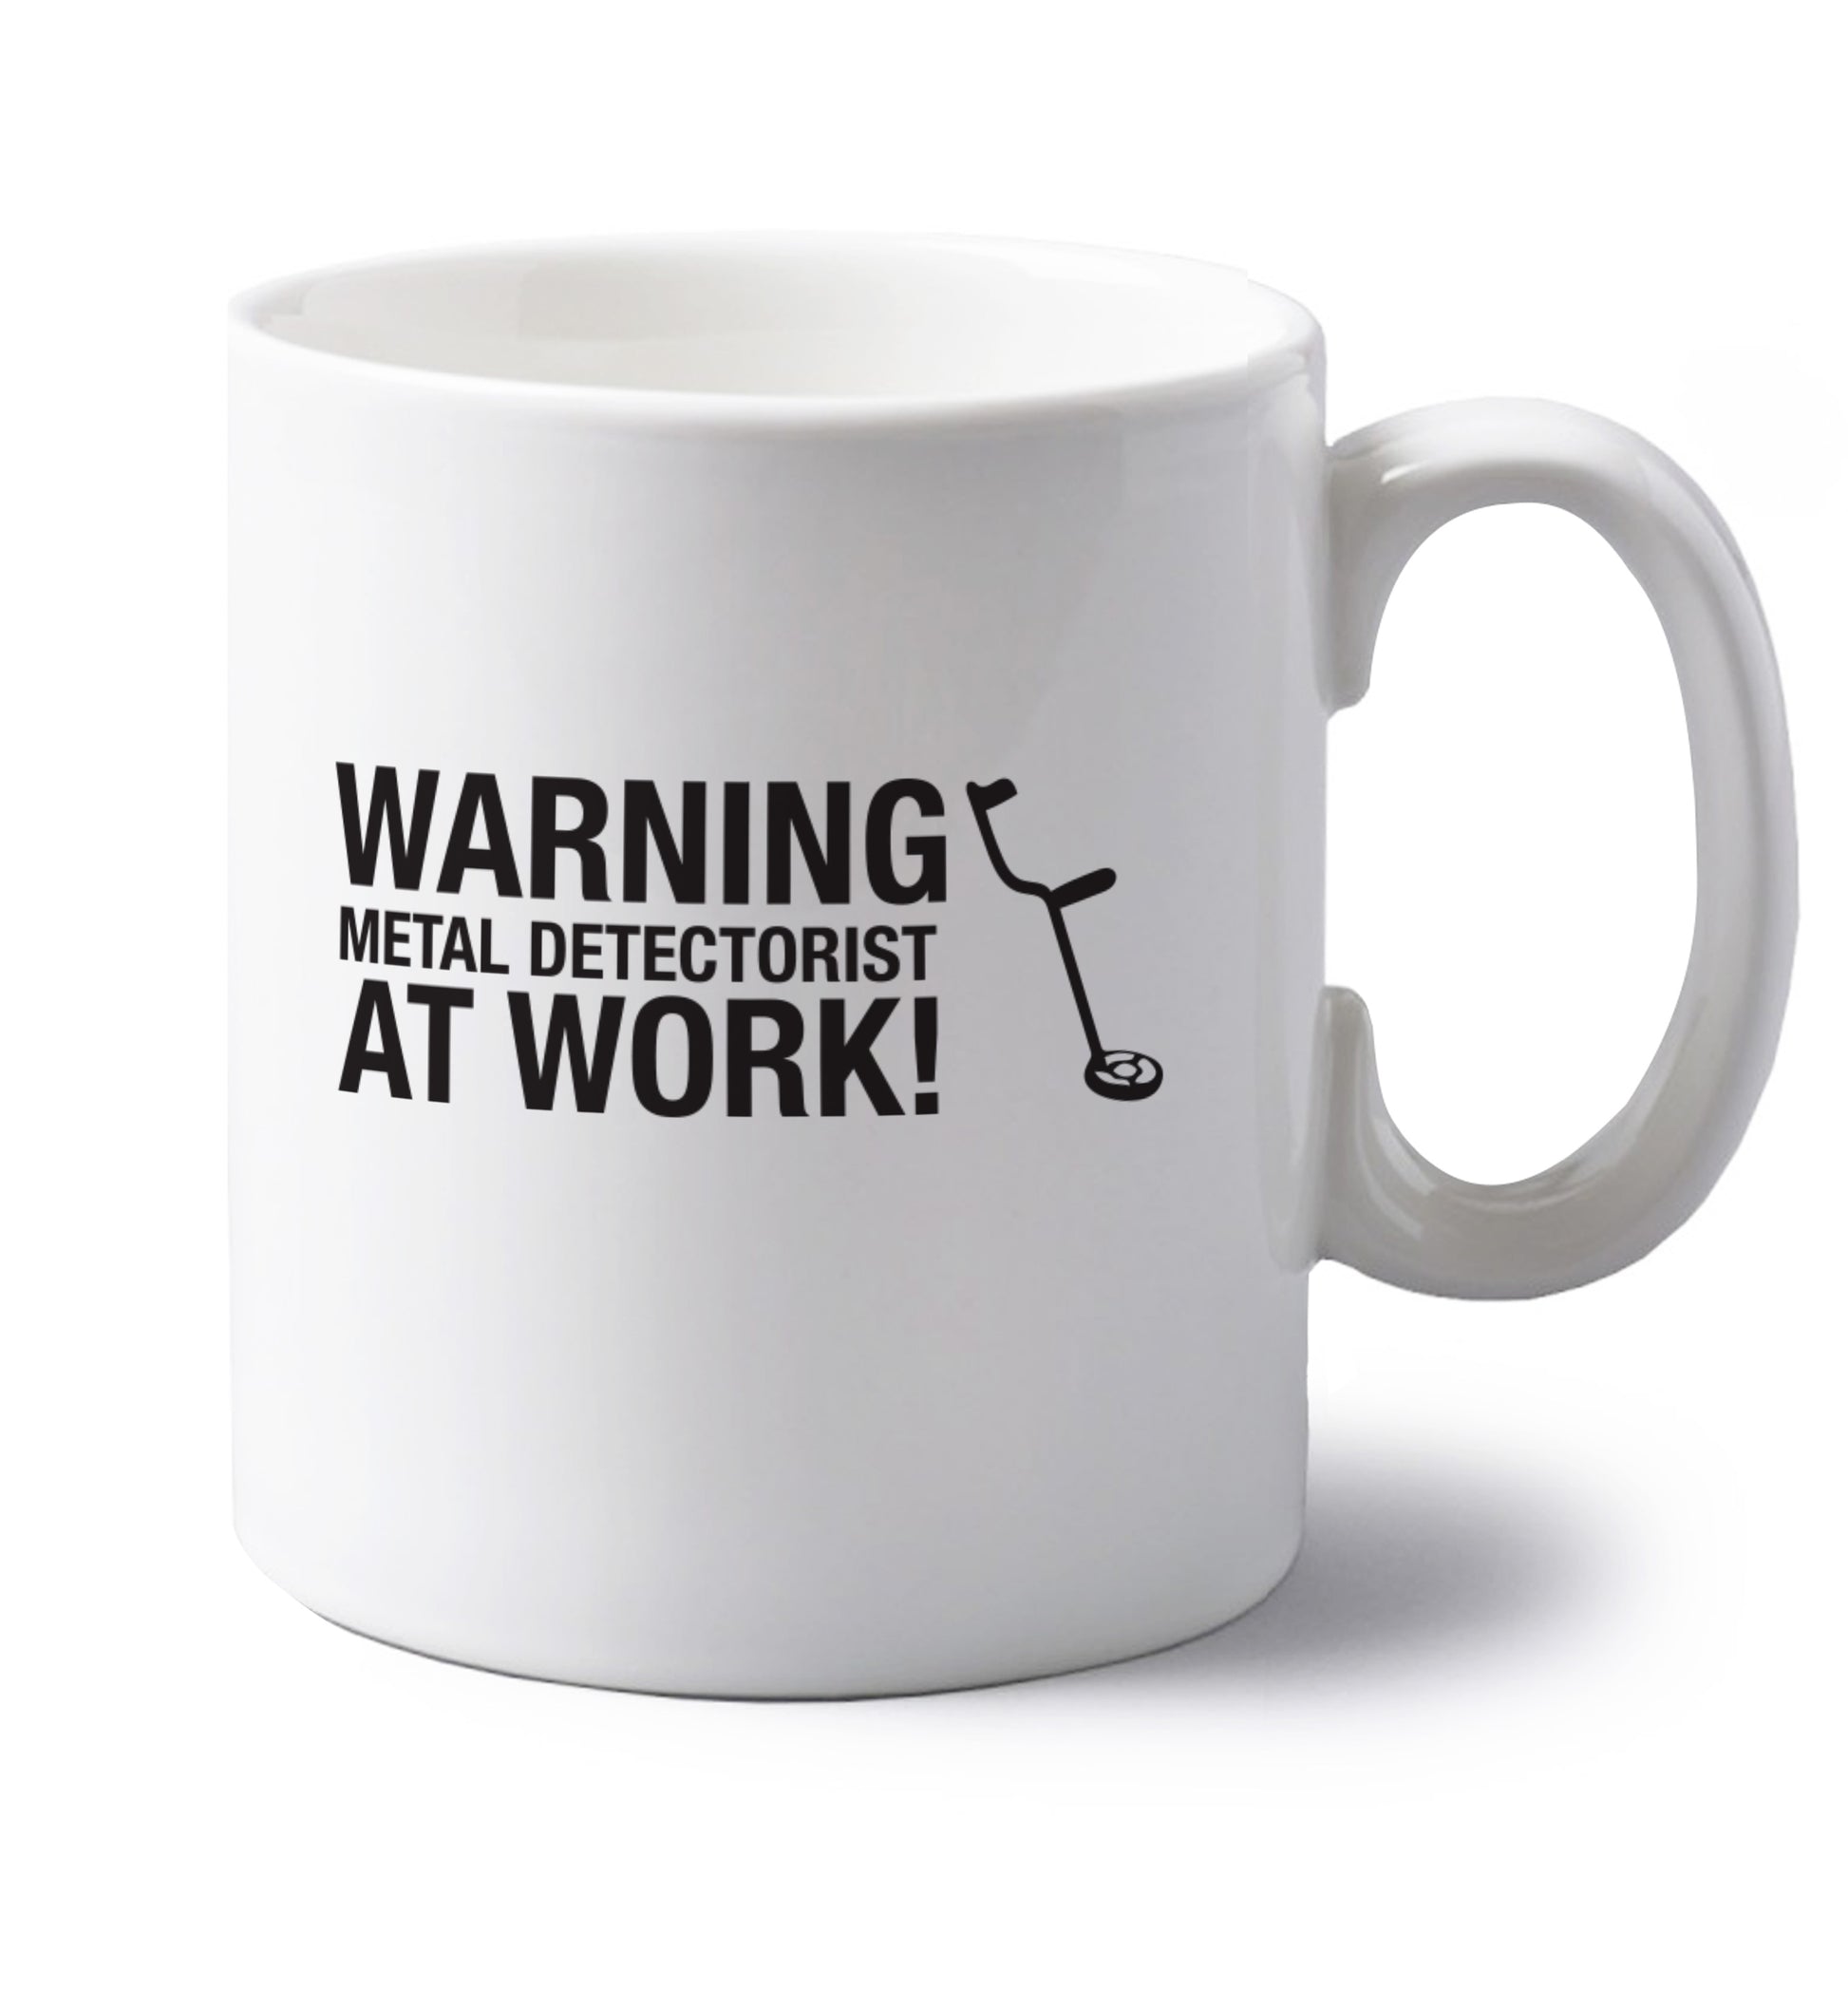 Warning metal detectorist at work! left handed white ceramic mug 